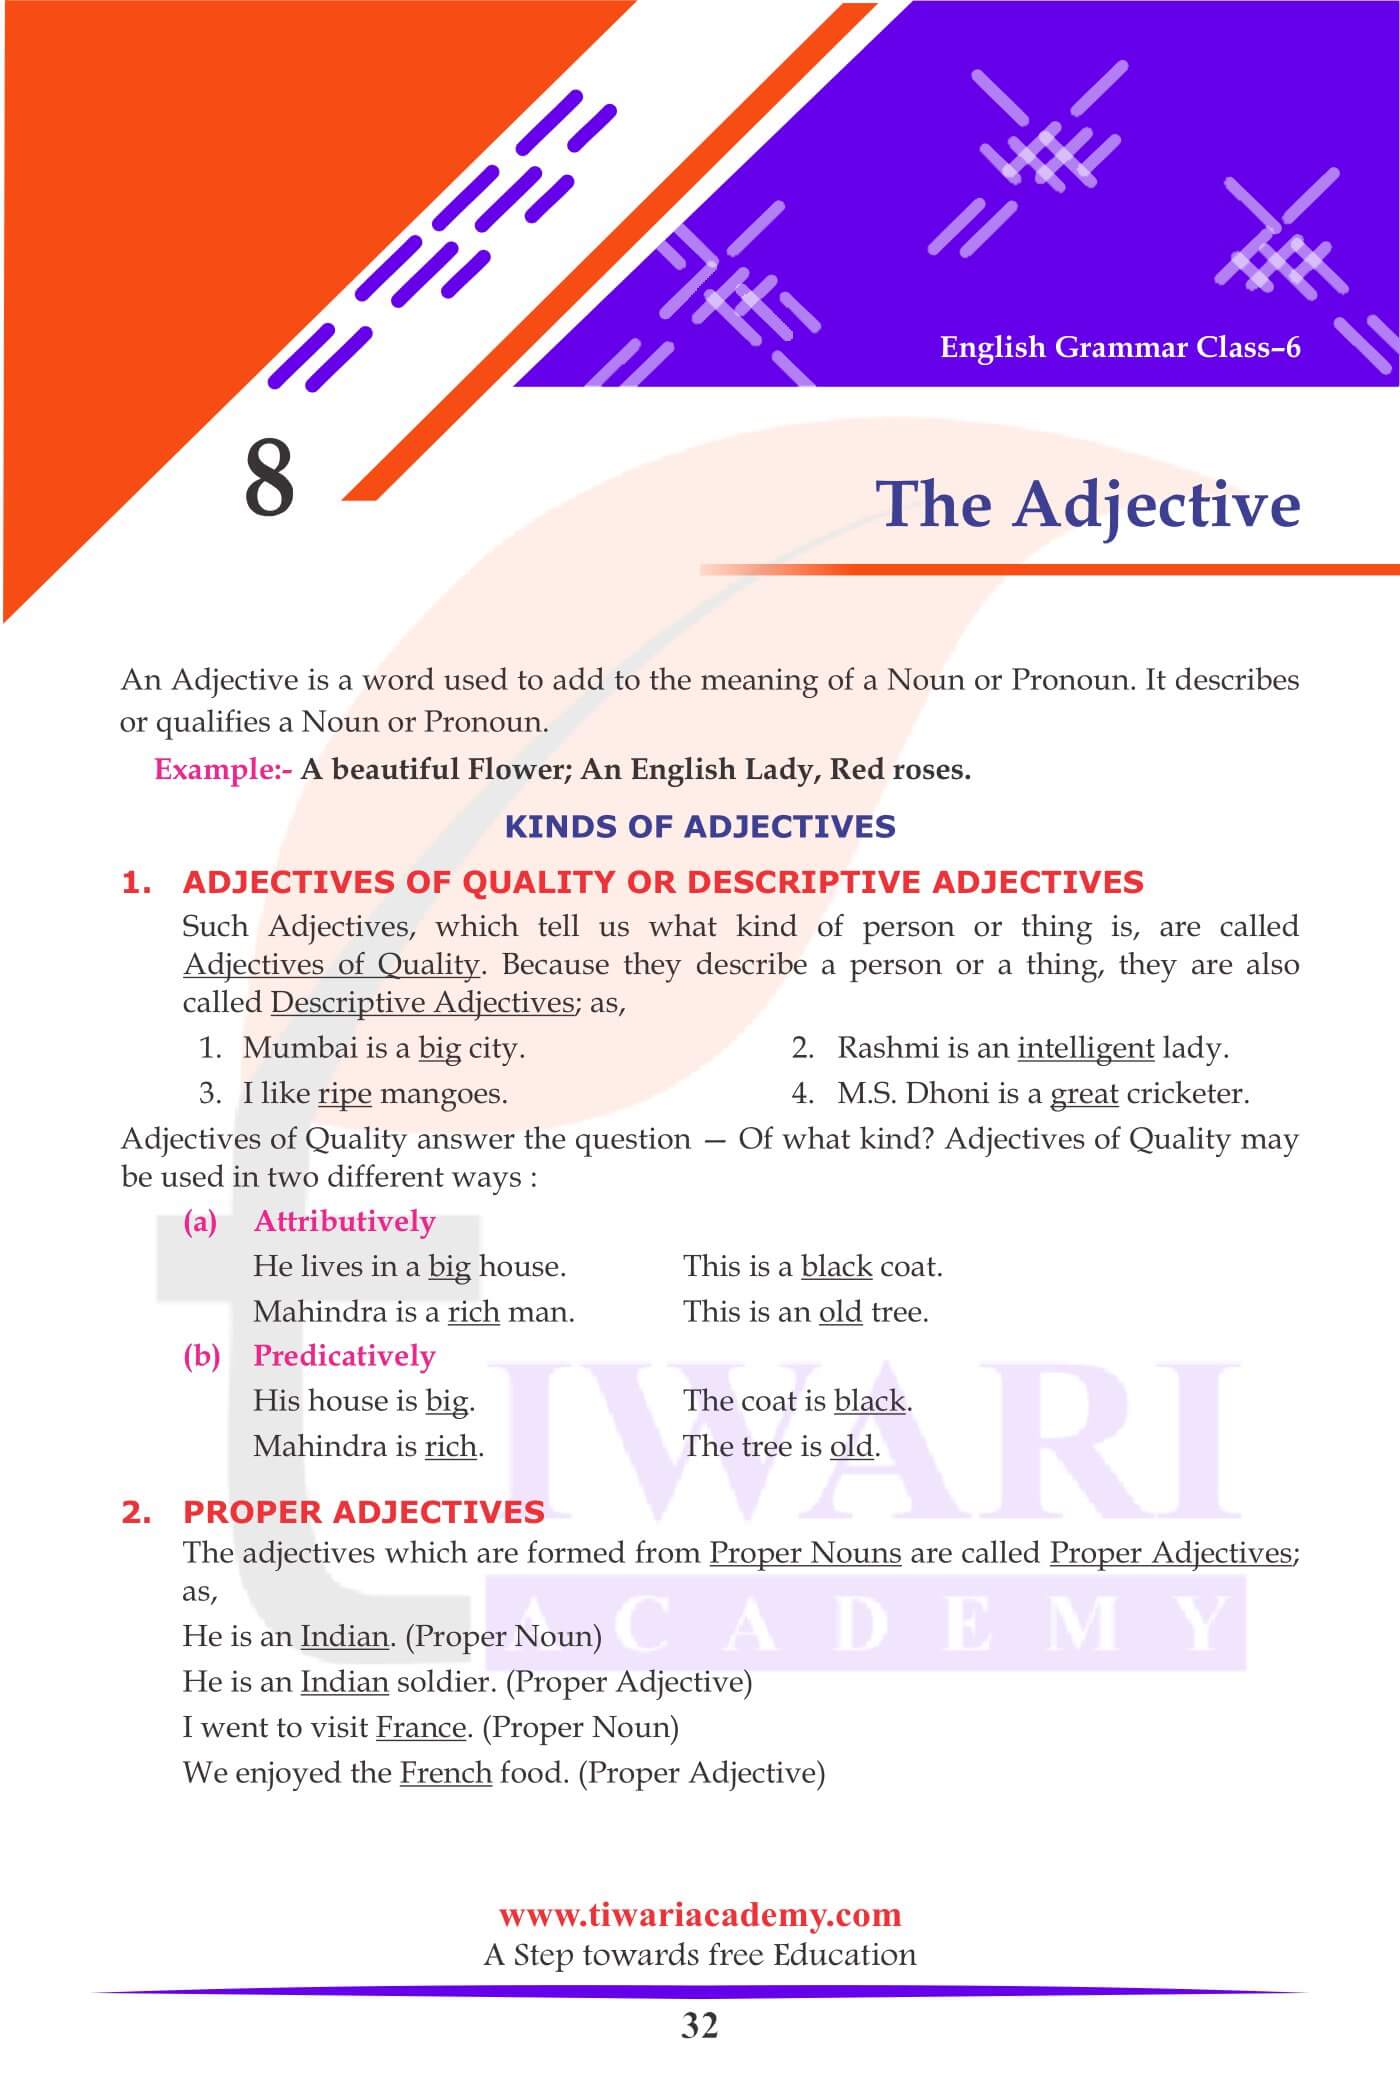 Class 6 English Grammar Chapter 8 The Adjective